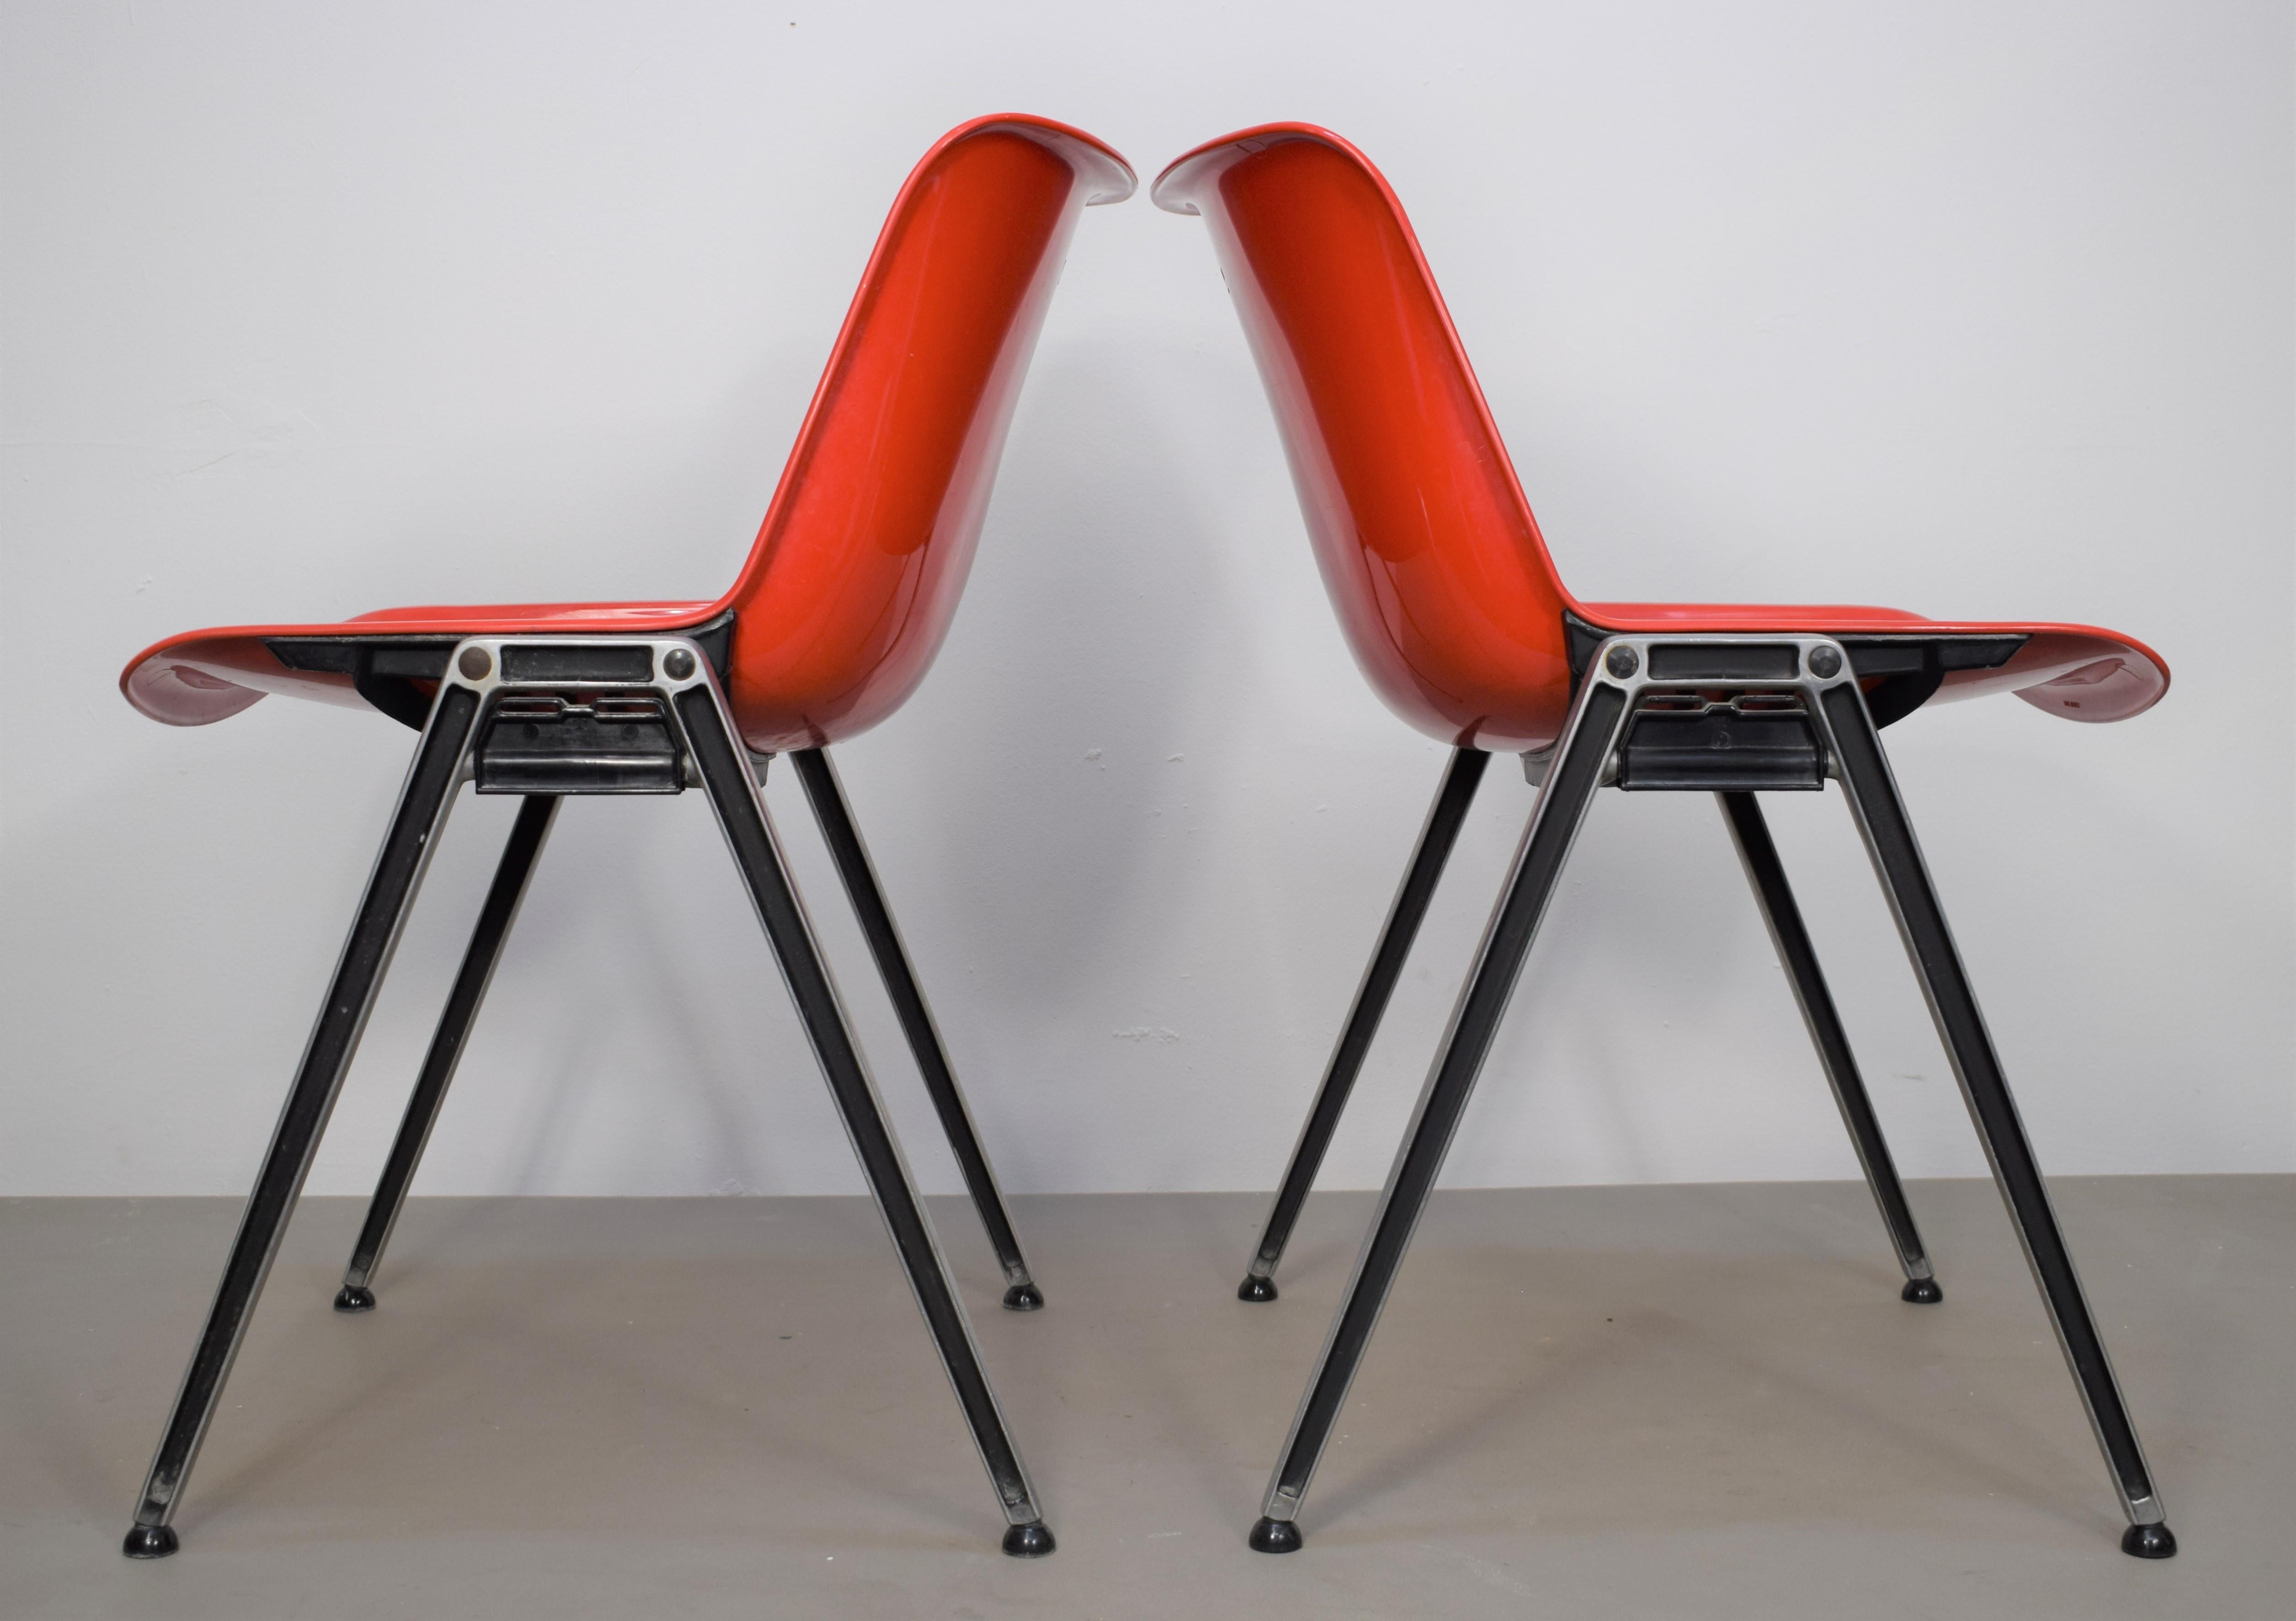 Osvaldo Borsani for Tecno, pair of Italian plastic chairs, 1970s.

Dimensions: H= 72 cm; W= 53 cm; D= 48 cm; Height seat = 43 cm.